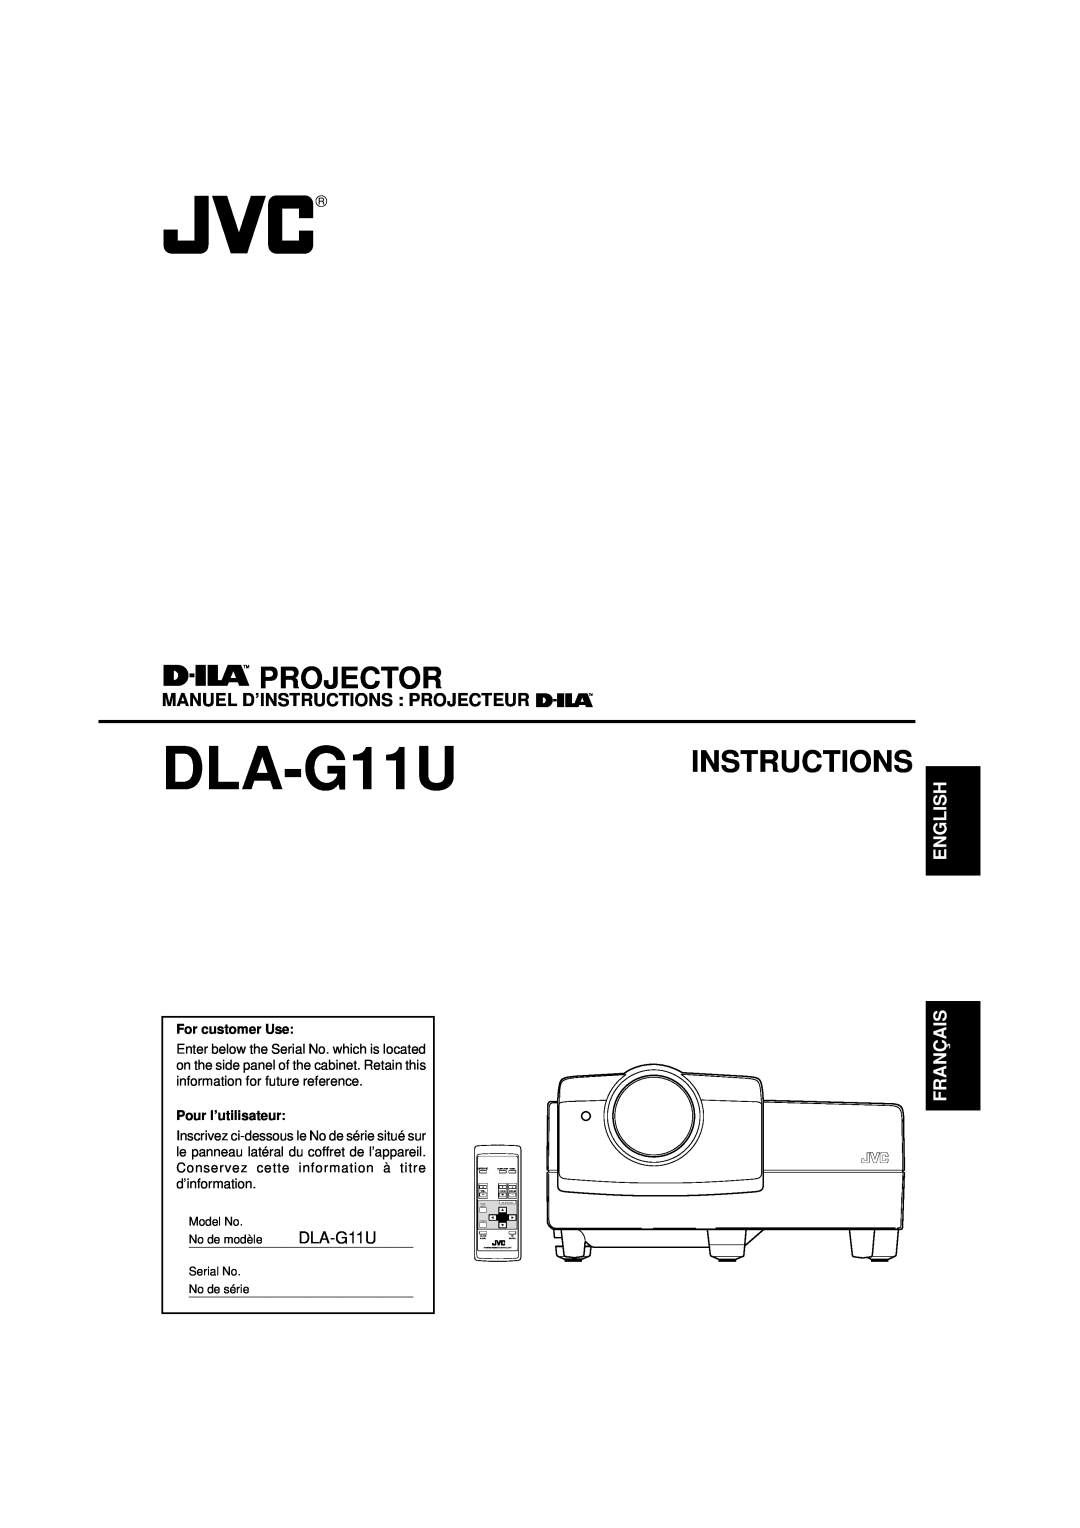 JVC DLA-G11U manual Projector, Manuel D’Instructions Projecteur, English, Français, For customer Use 